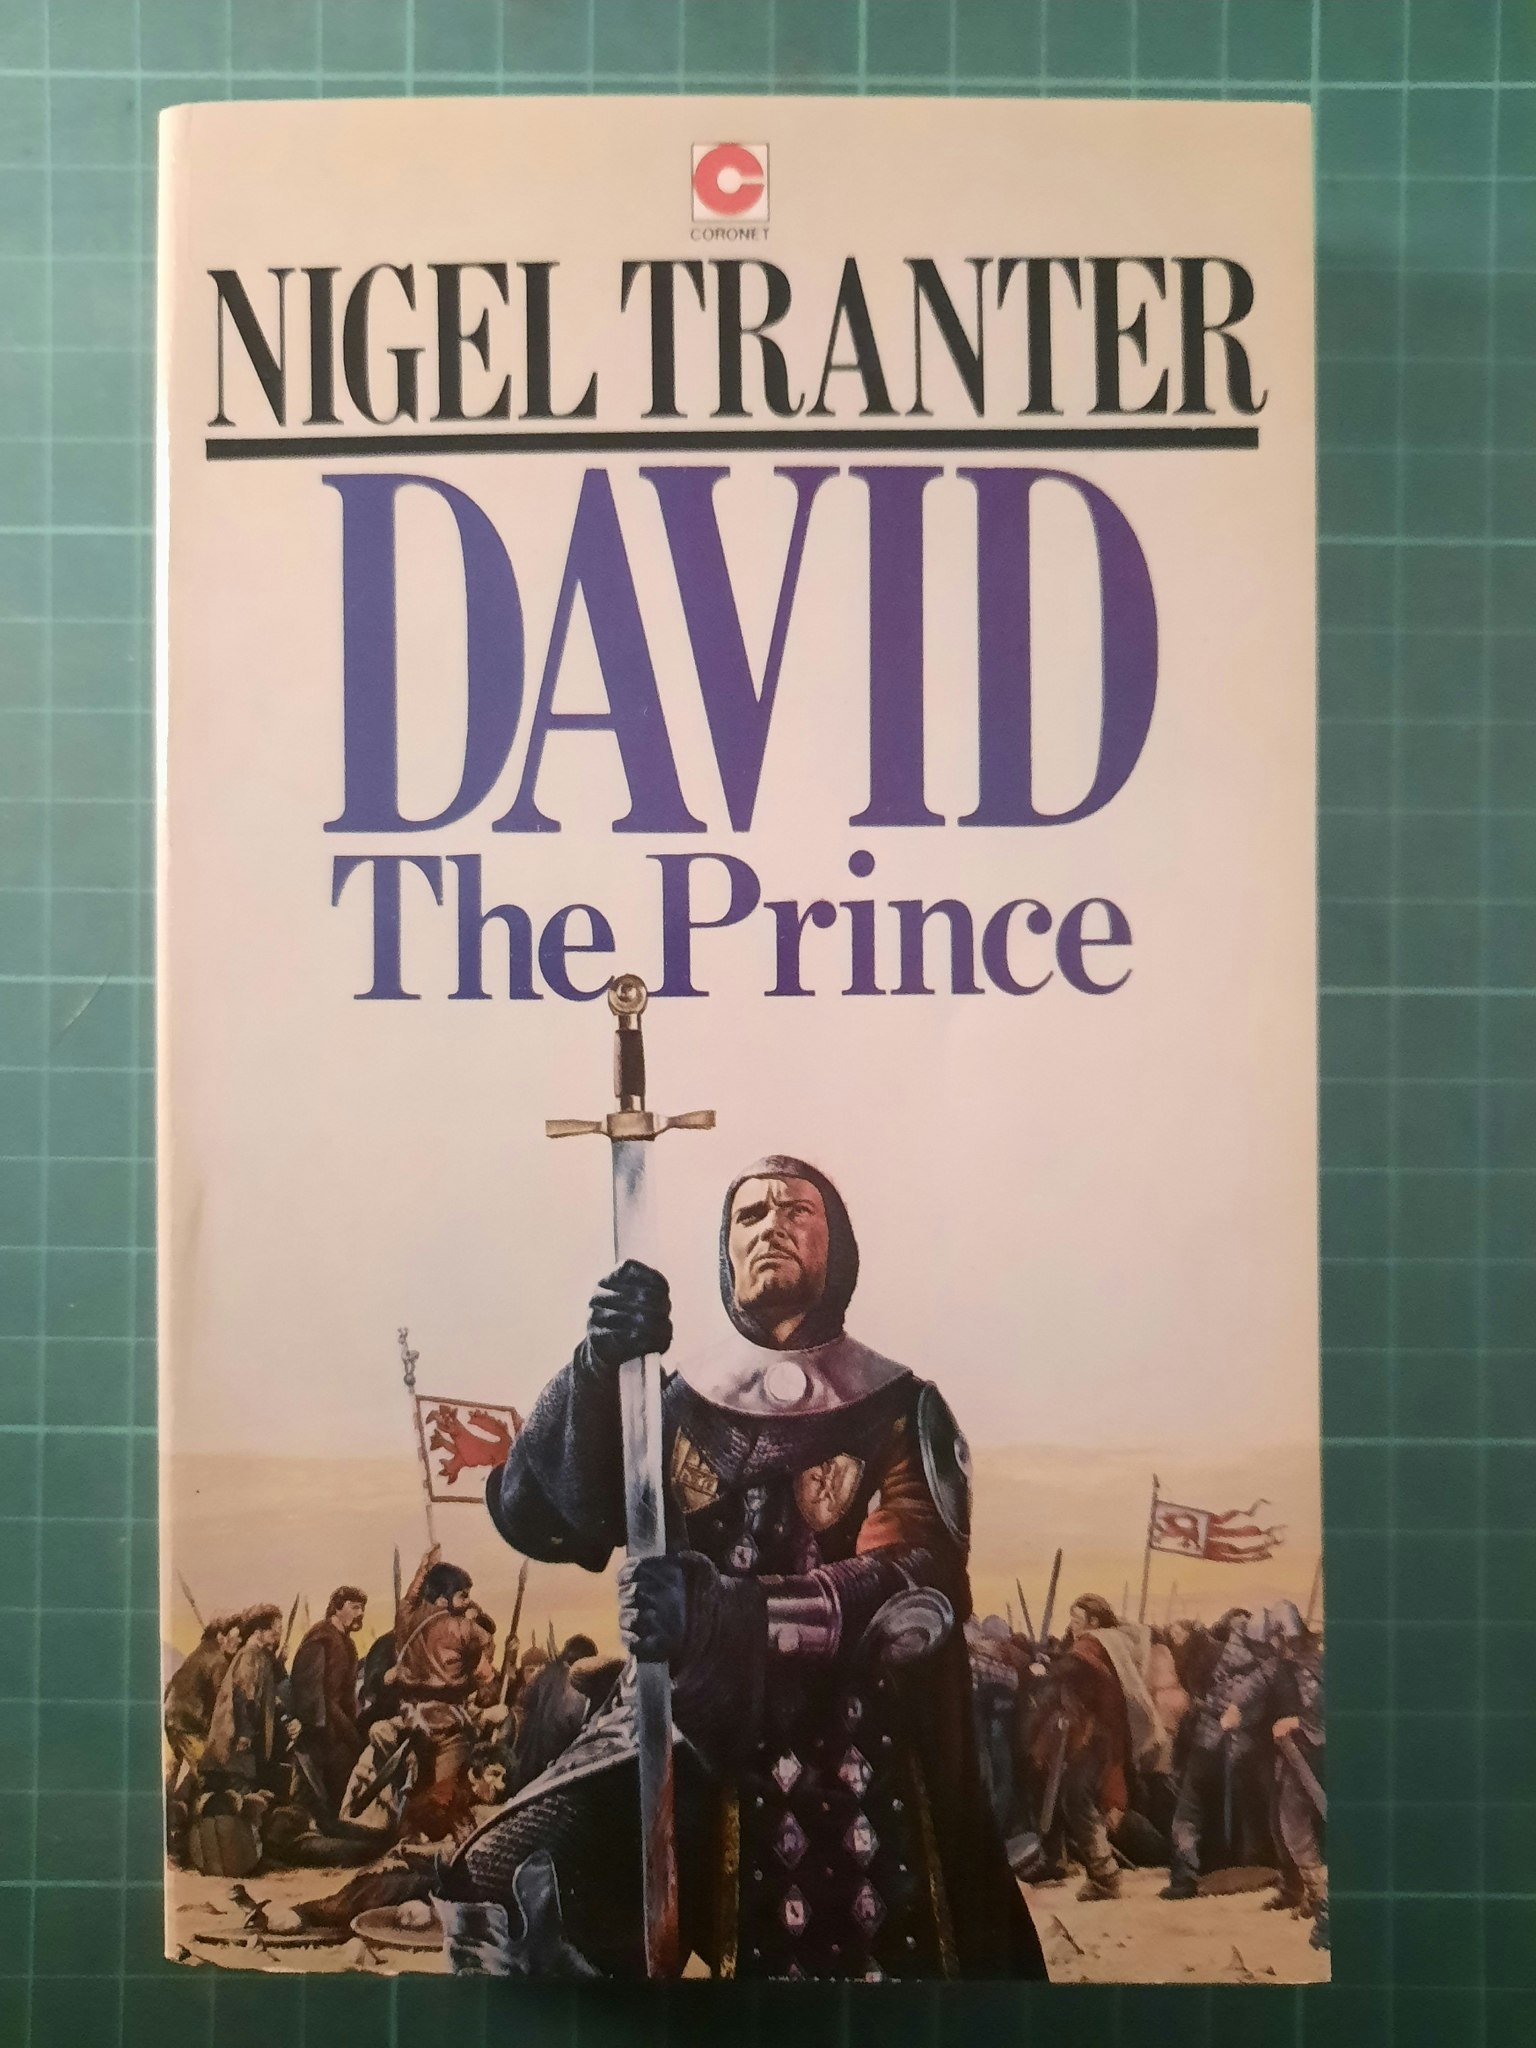 David the prince